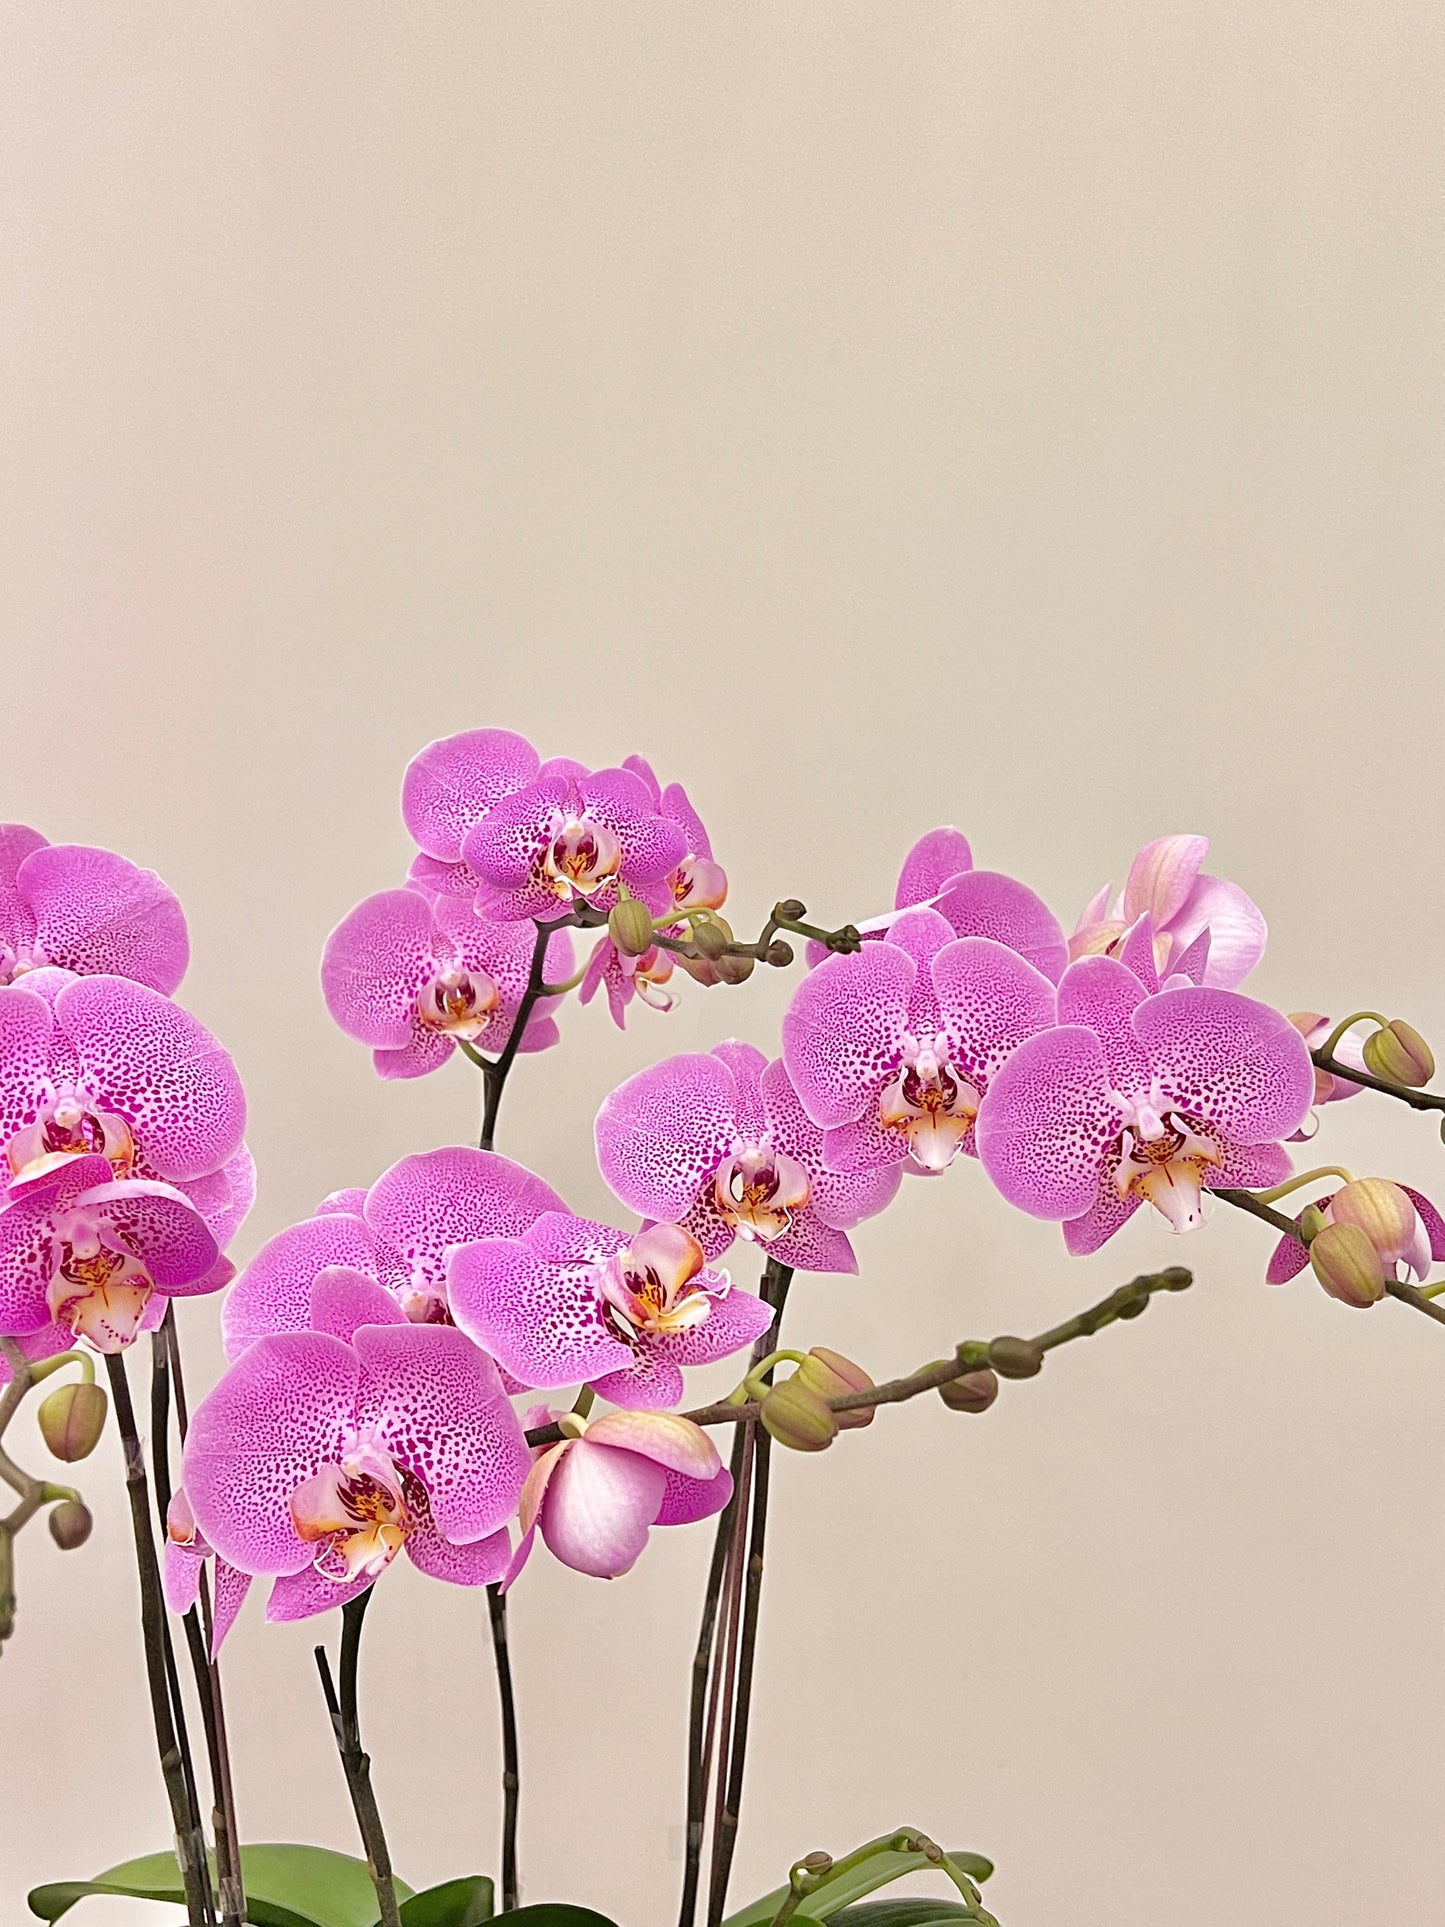 賀年蘭花盆栽擺設 Orchid #6